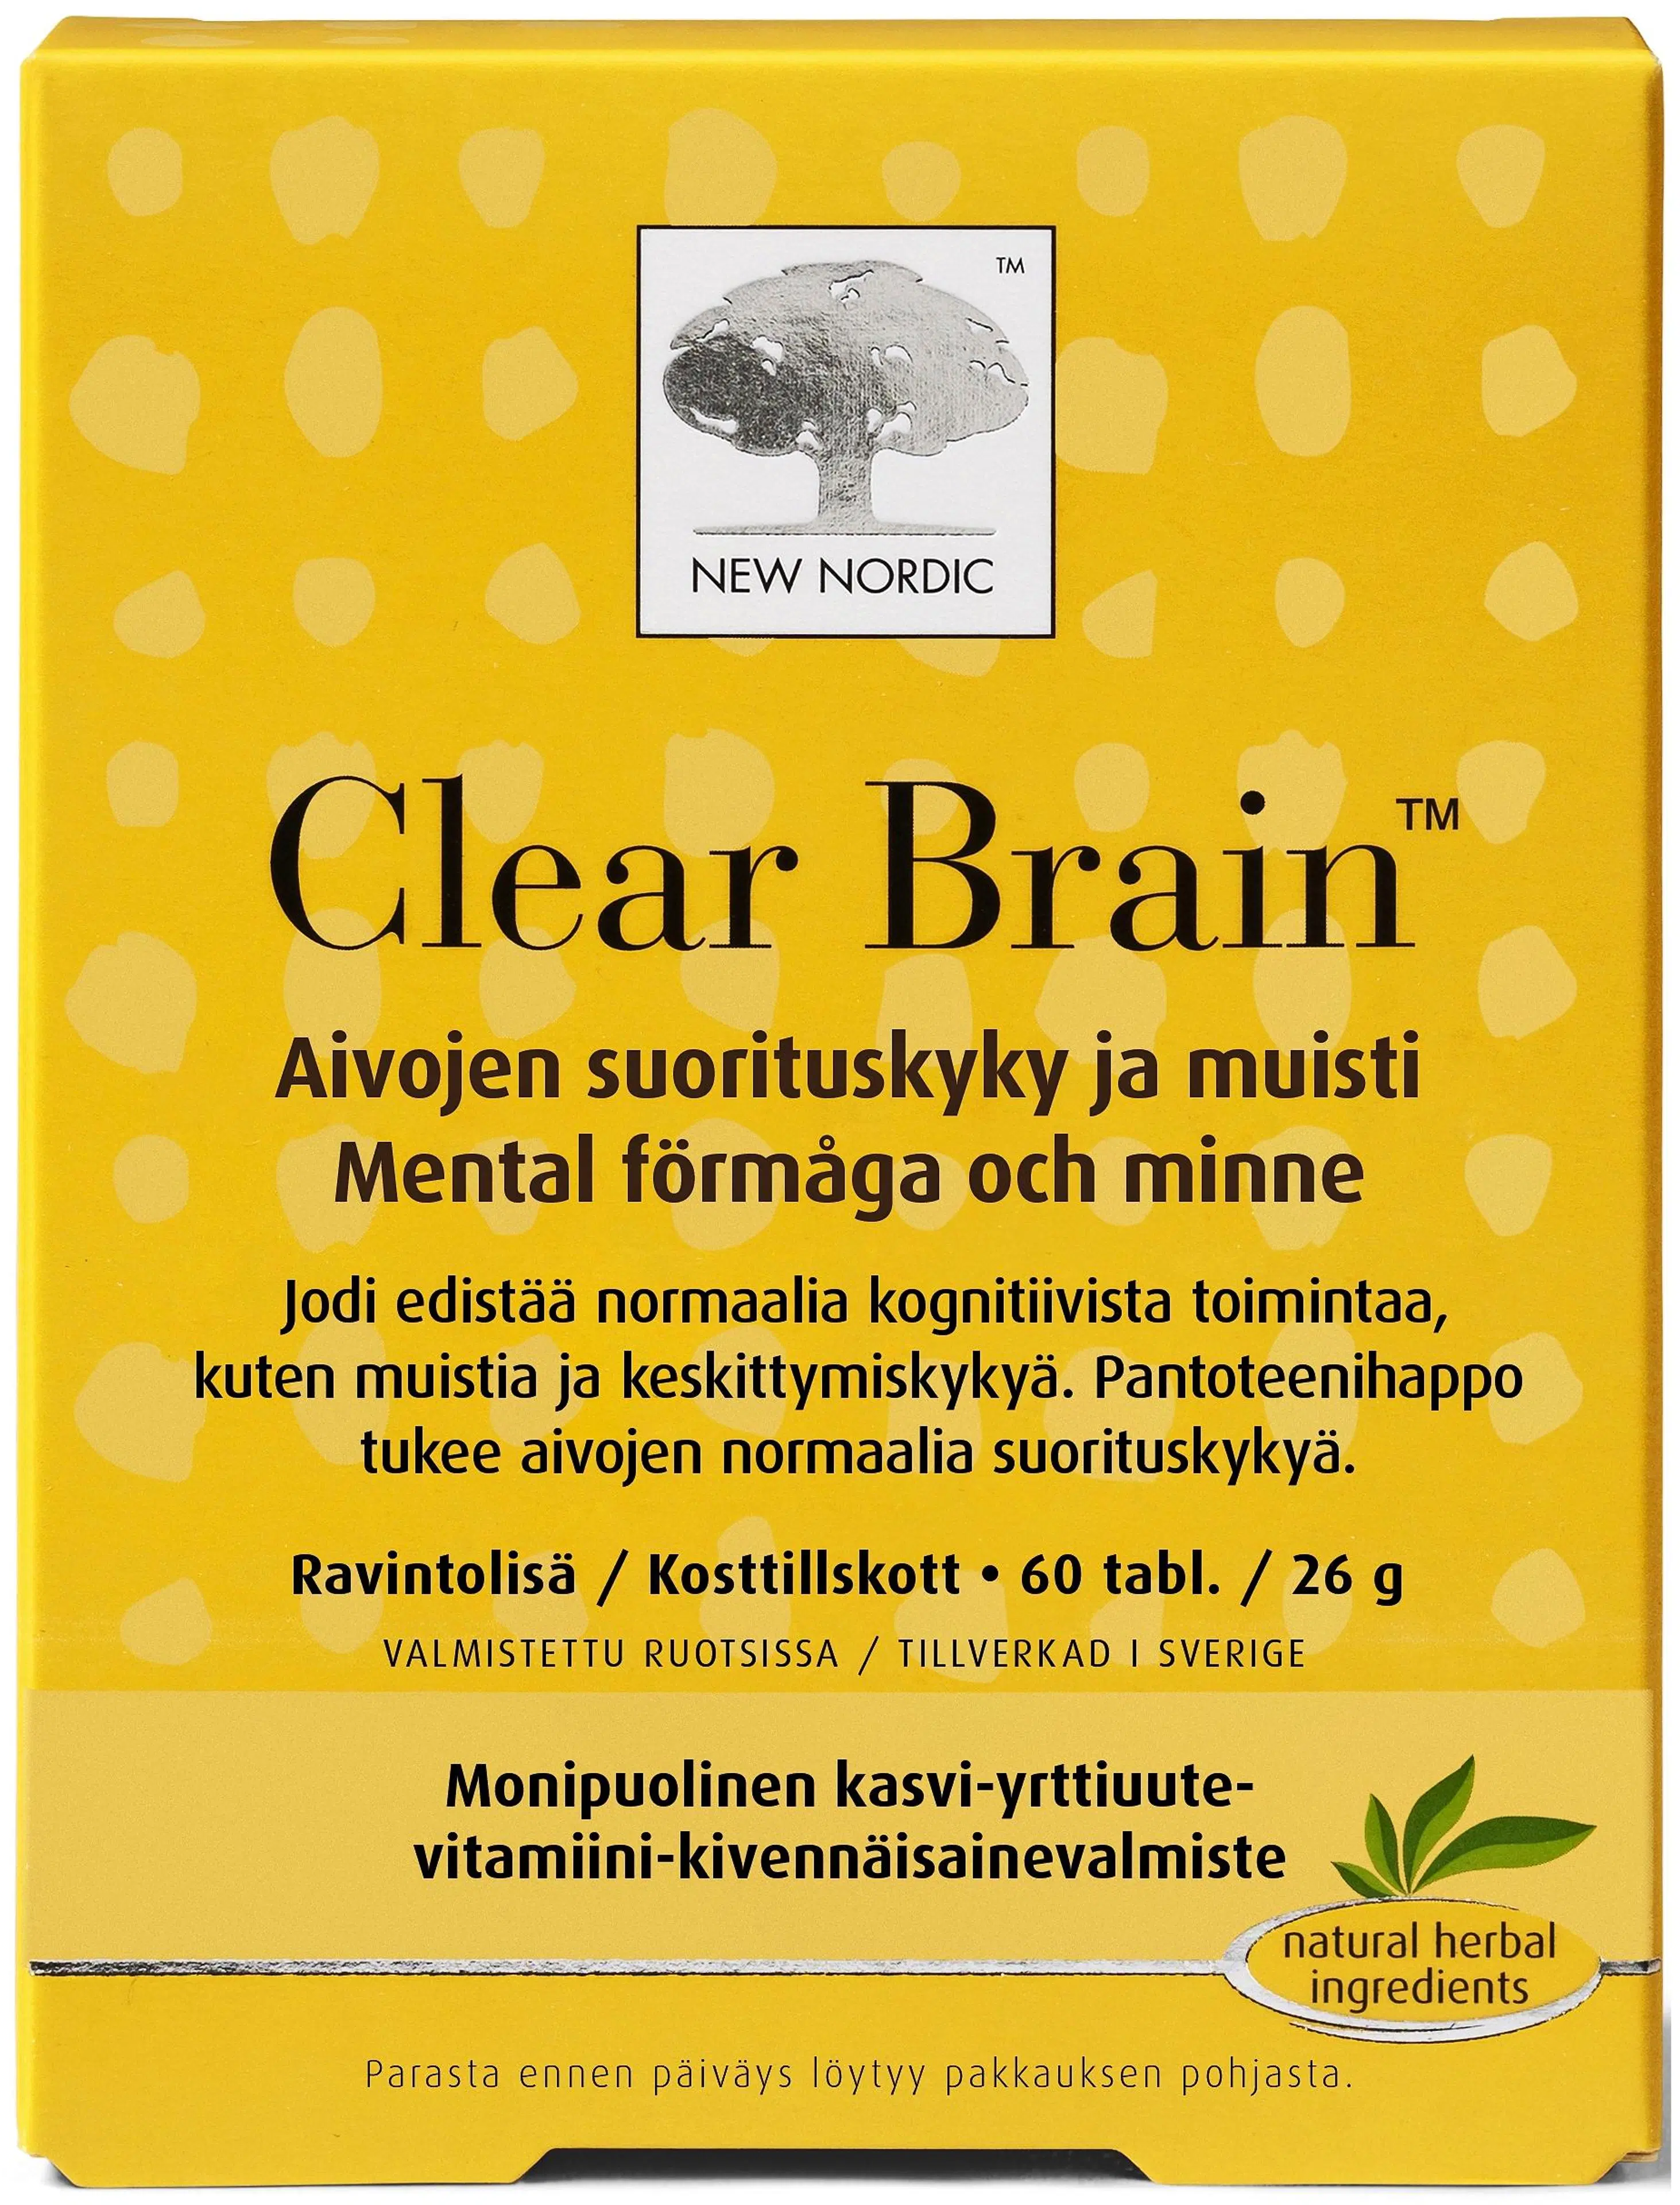 New Nordic Clear Brain™ ravintolisä 60 tabl.